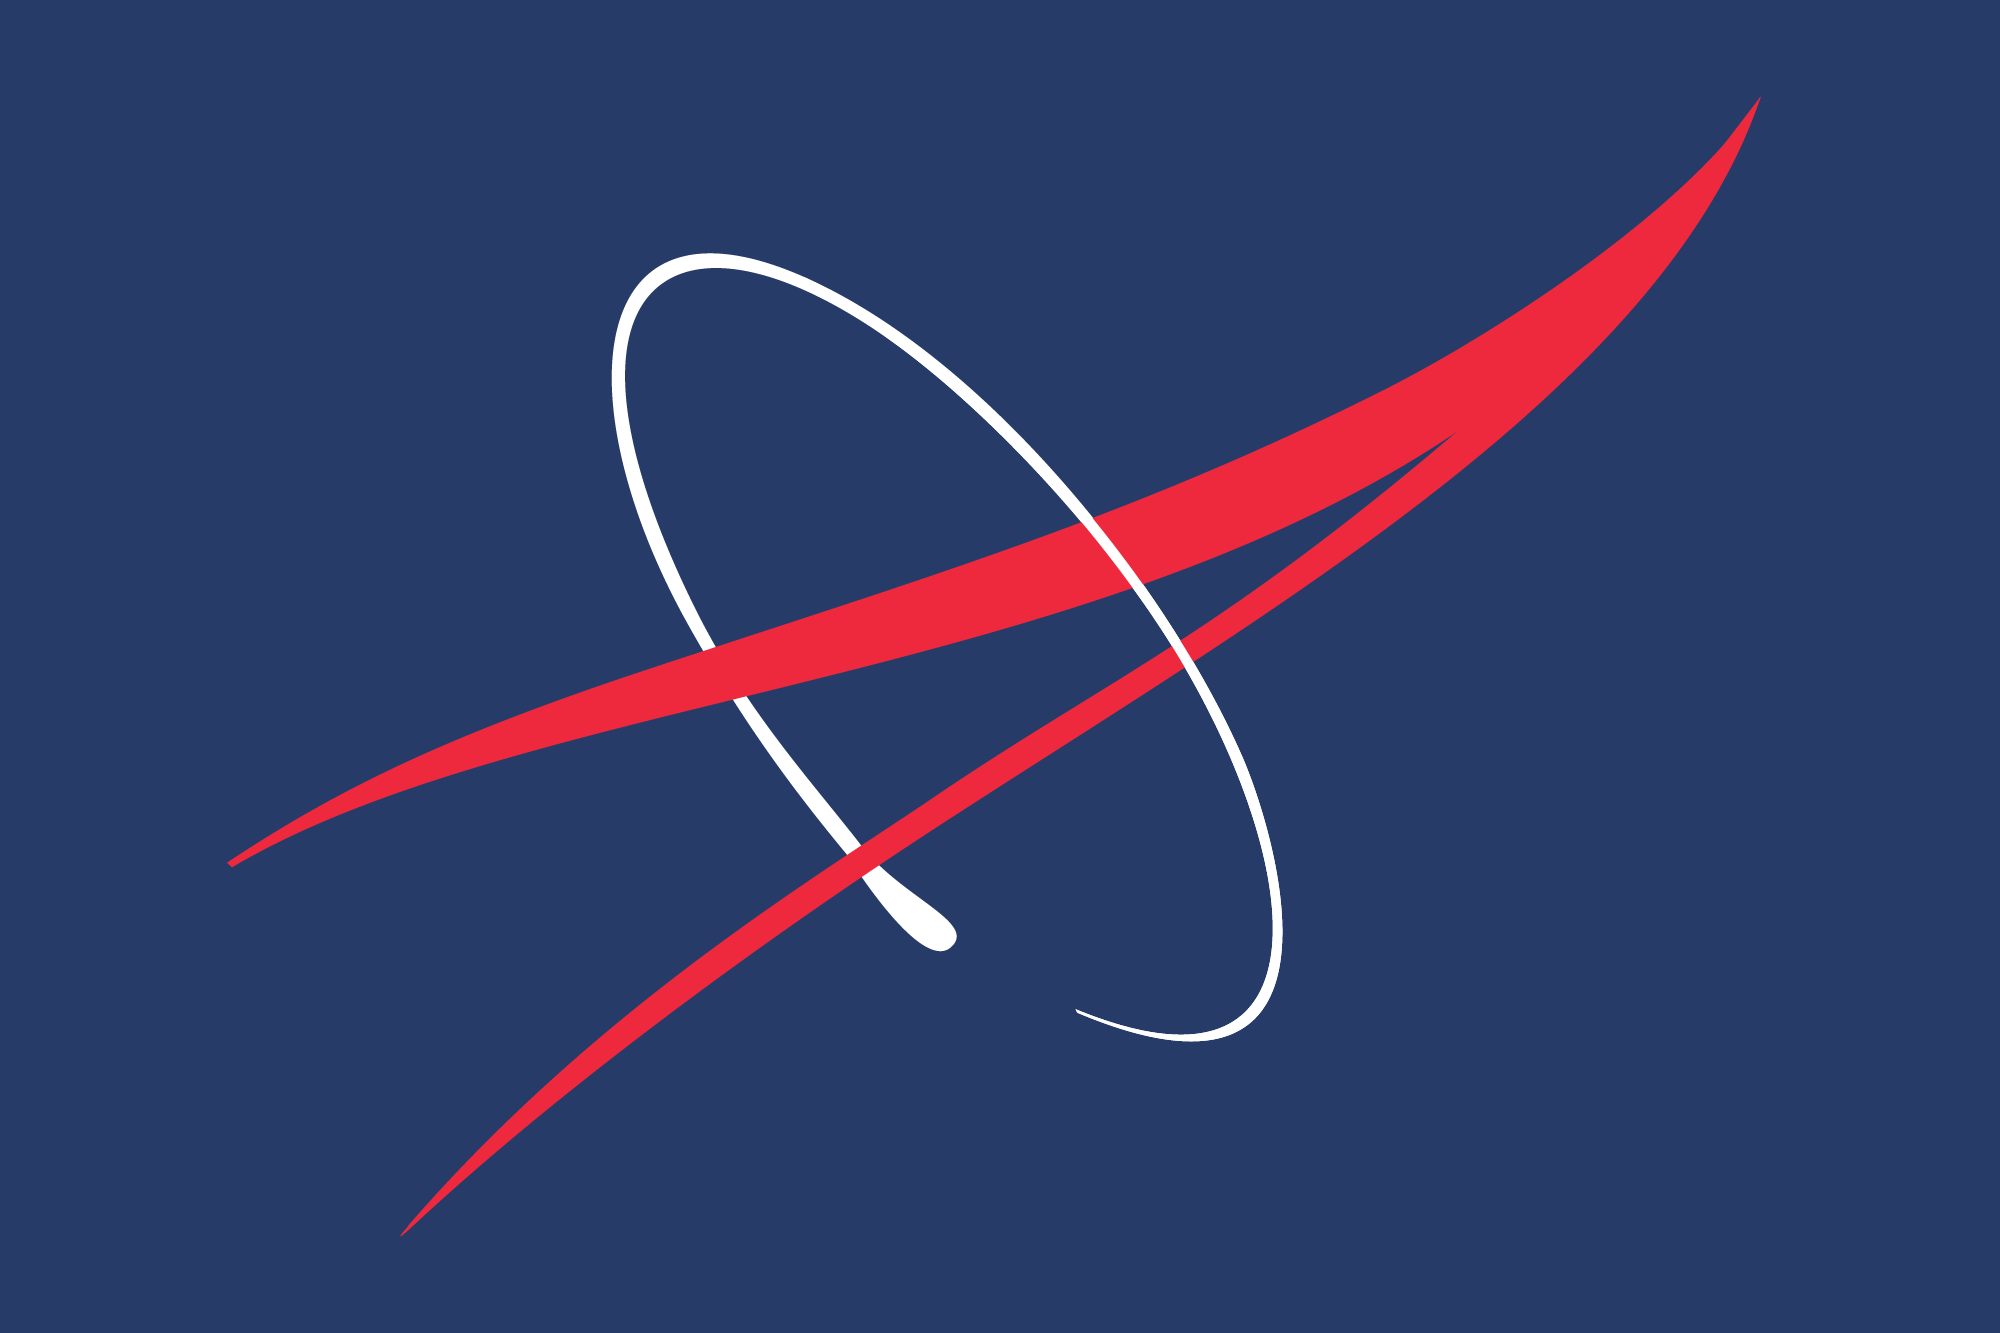 NASA Red Logo - My take on a NASA flag